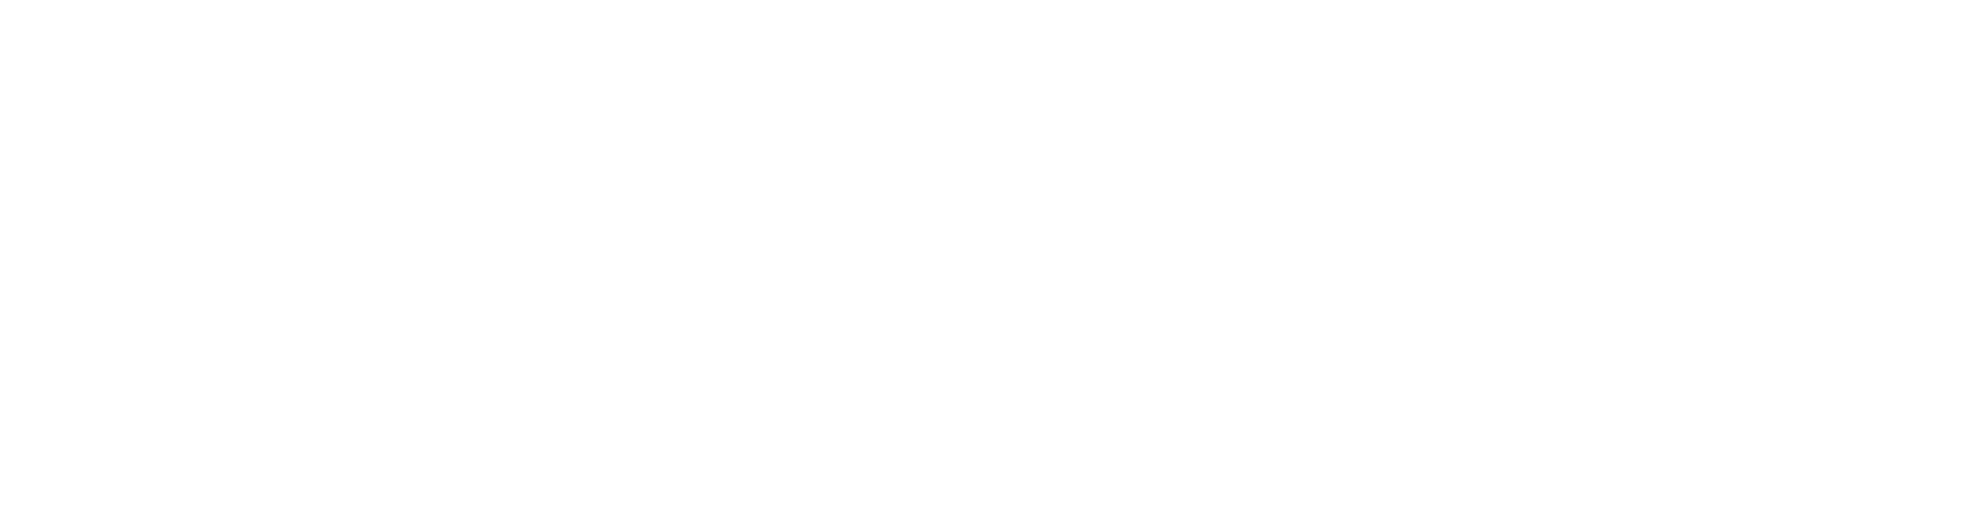 GoodFriend Self-Storage